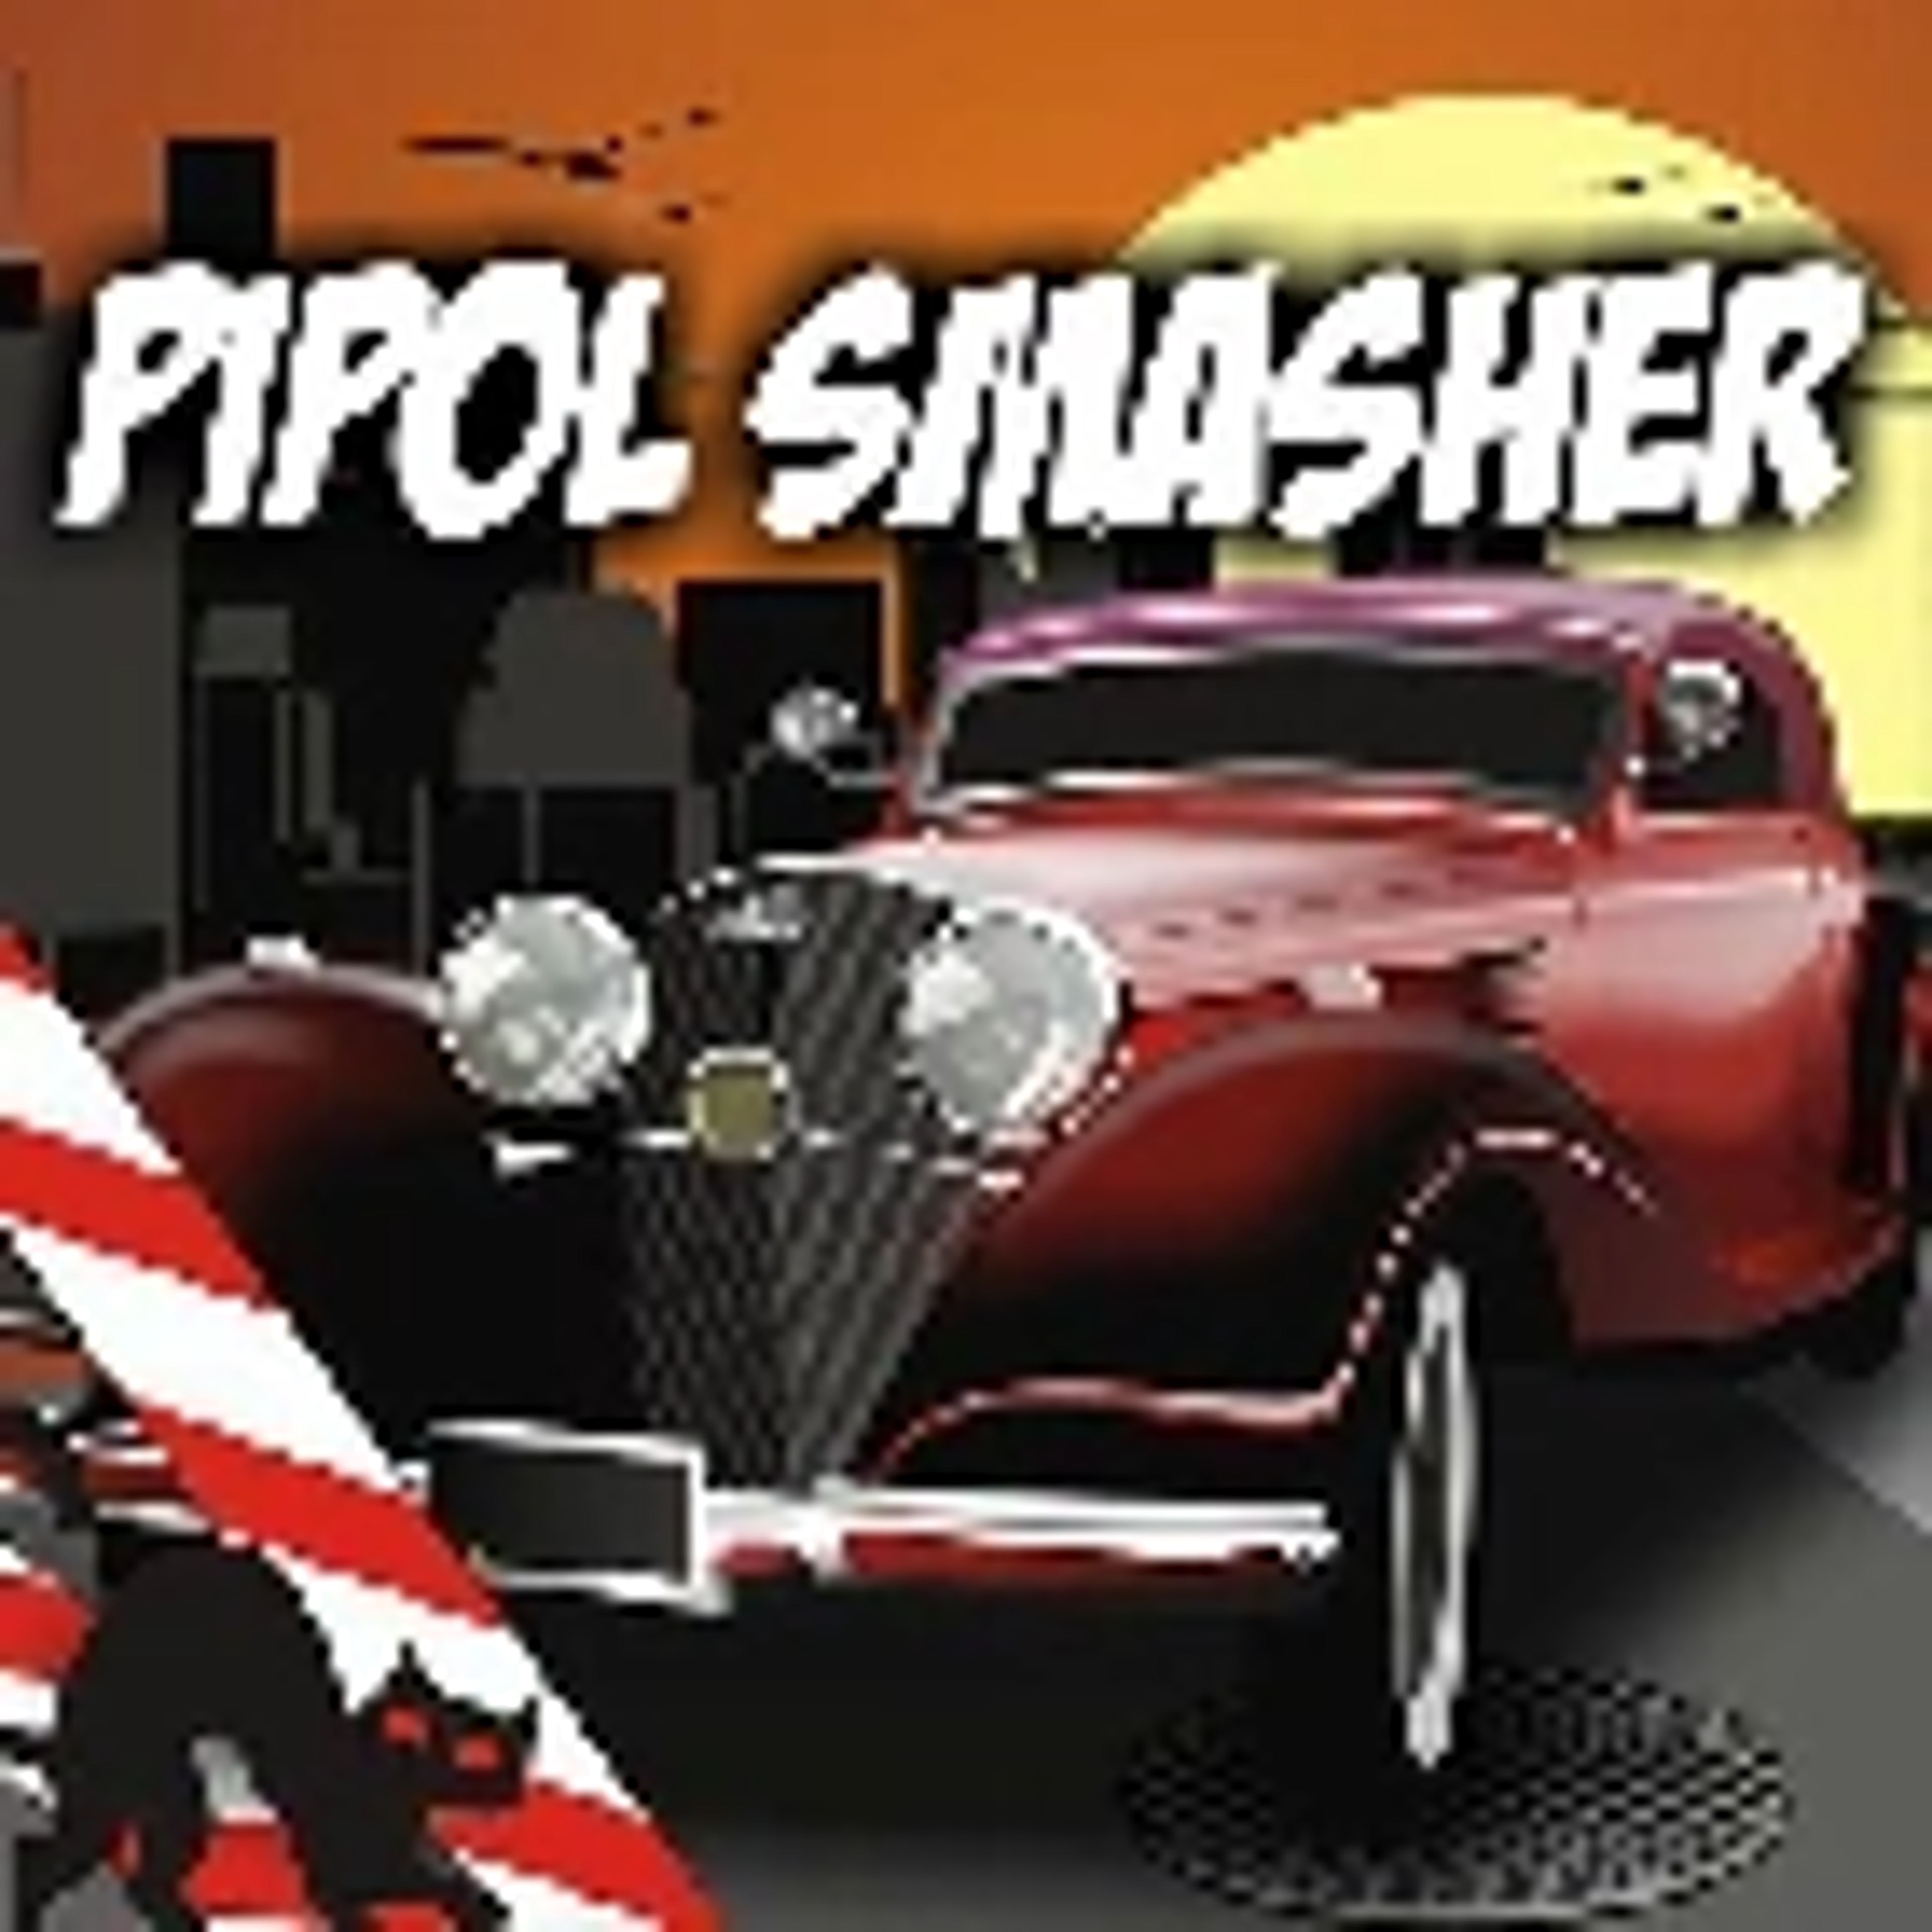 Pipol Smasher